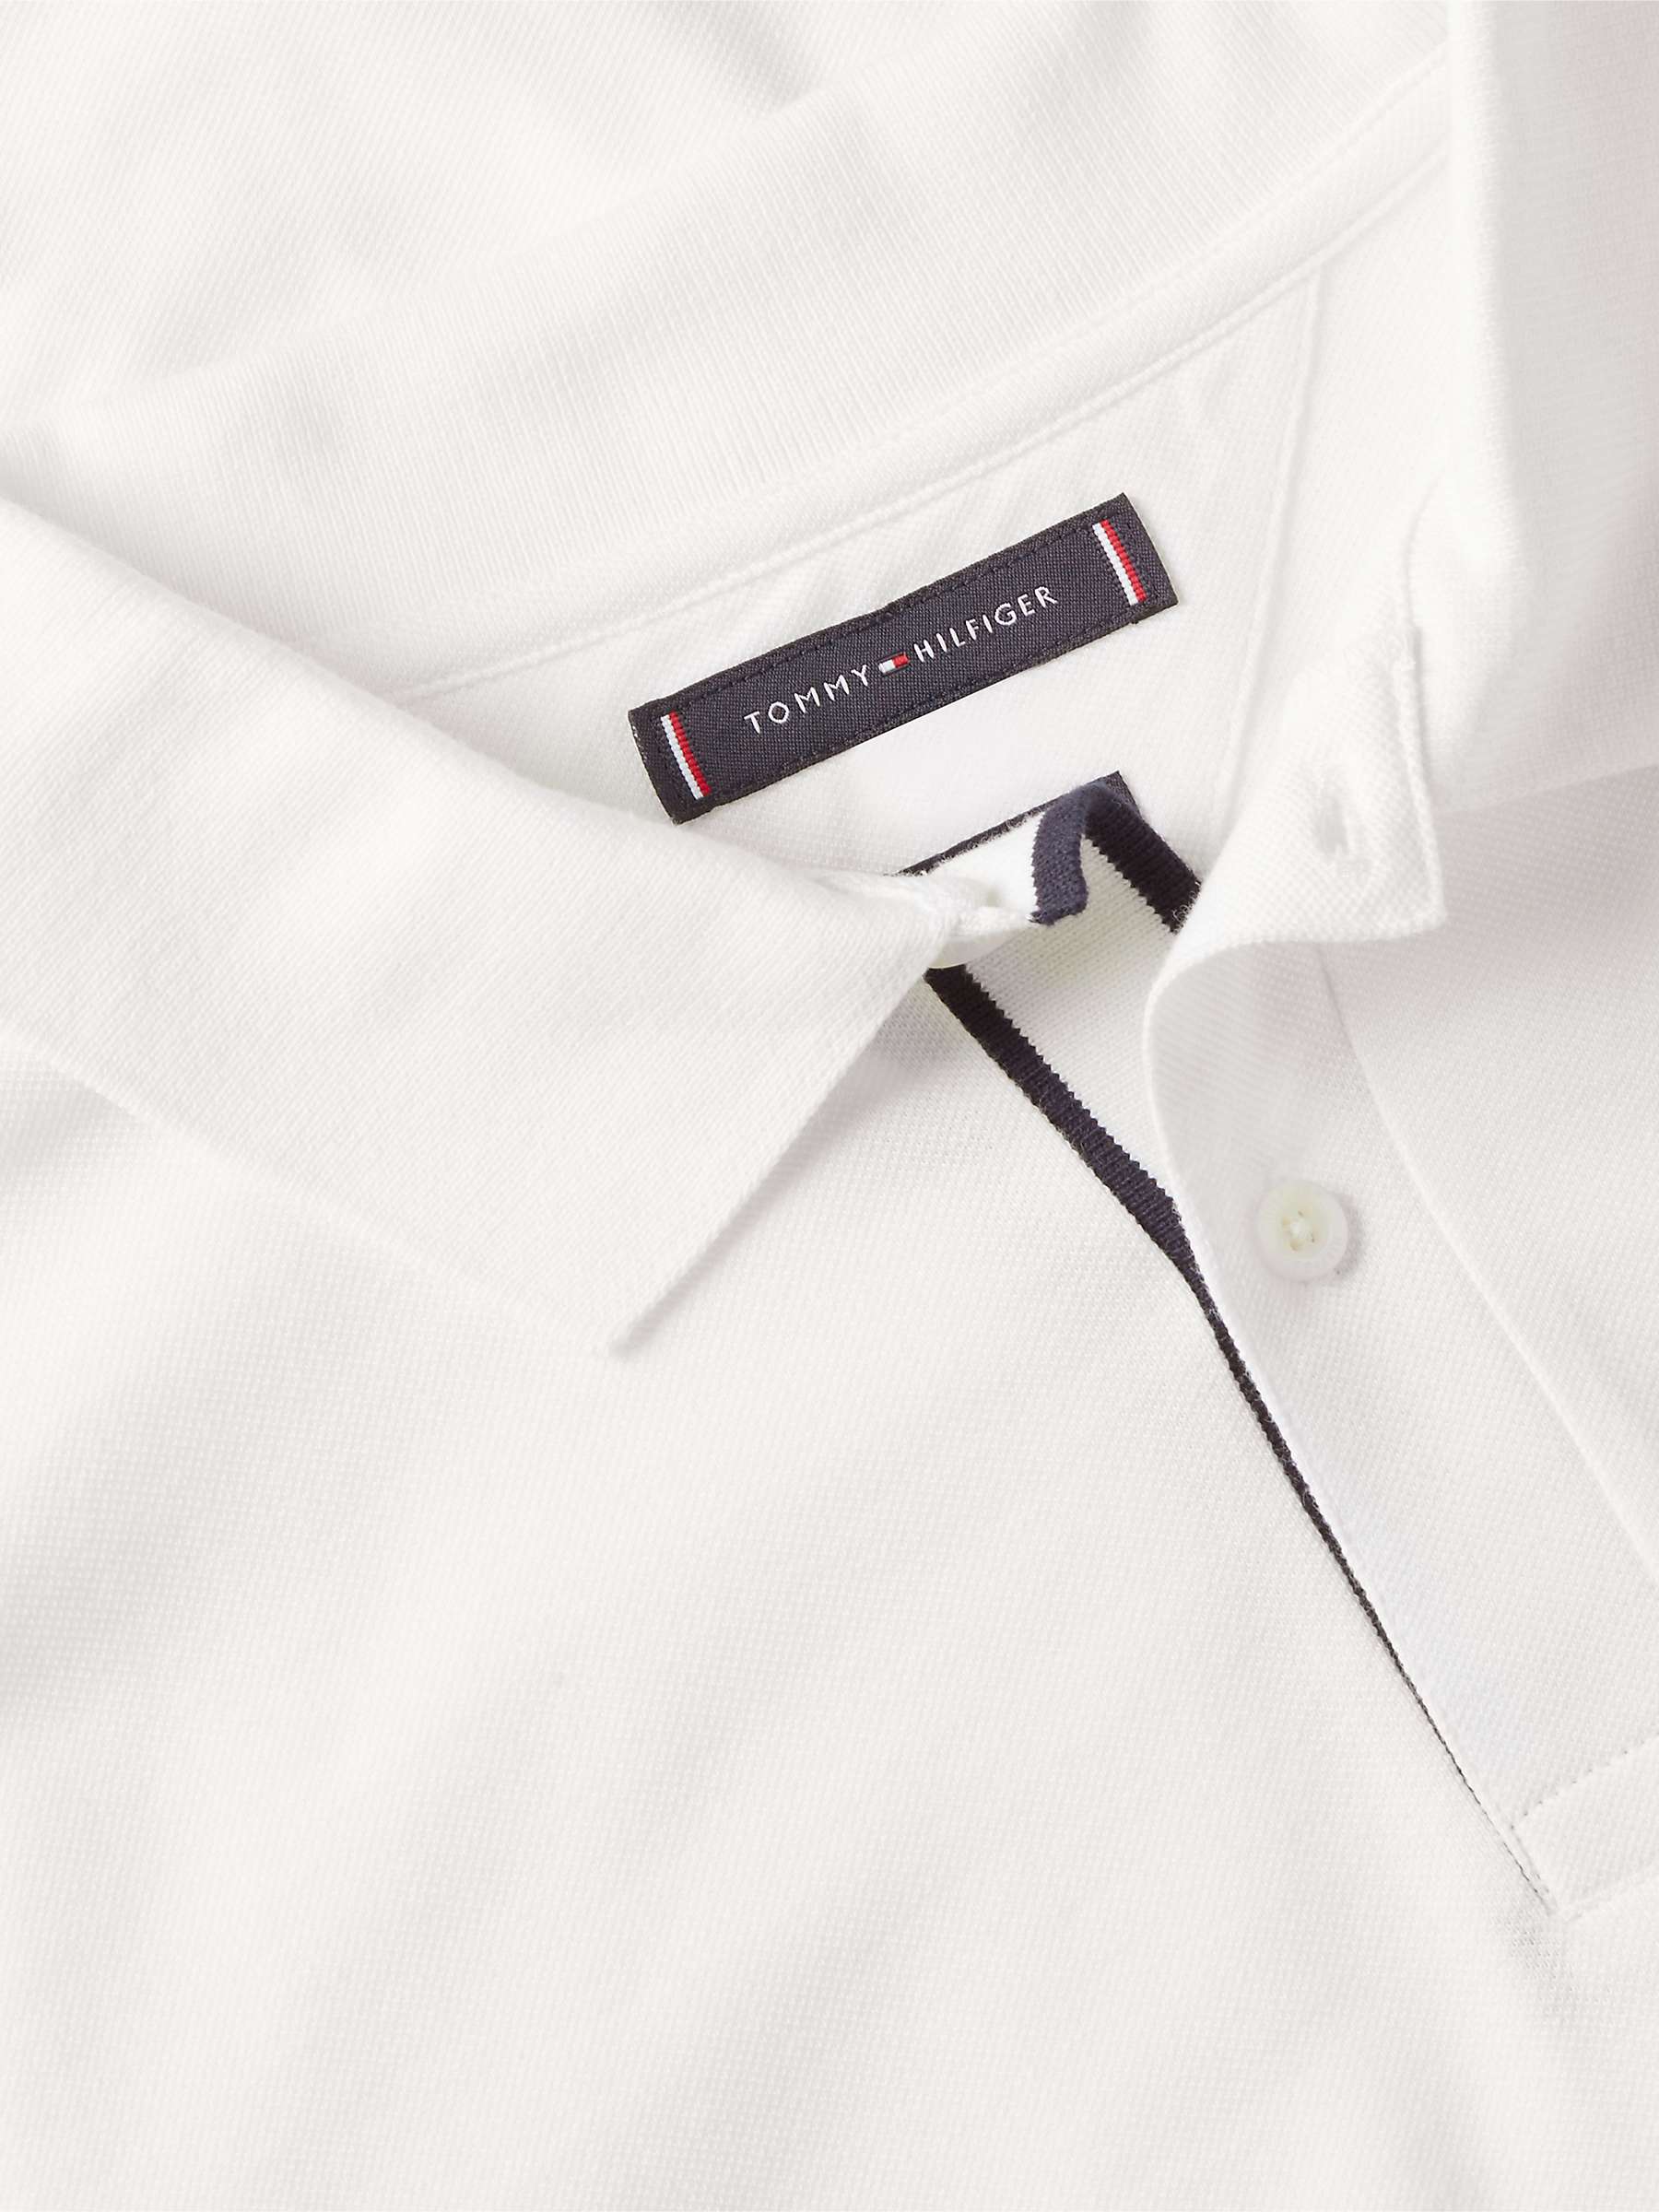 Buy Tommy Hilfiger Regular Fit Polo Shirt, White Online at johnlewis.com